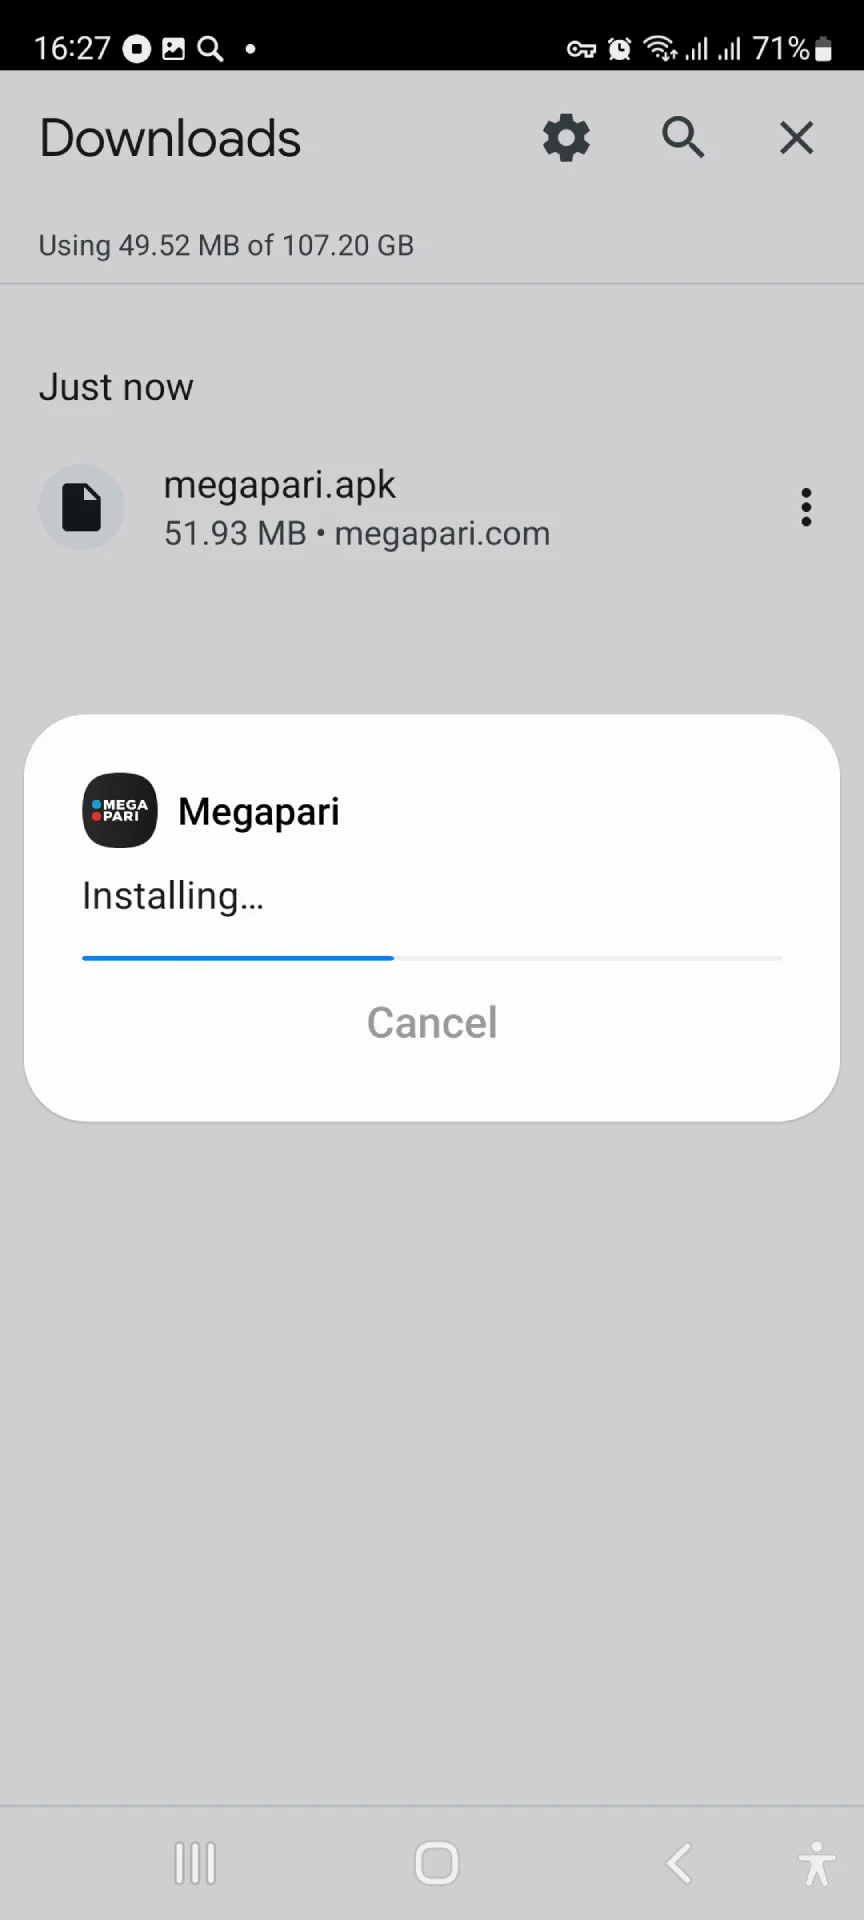 Confirm downloading the Megapari app.